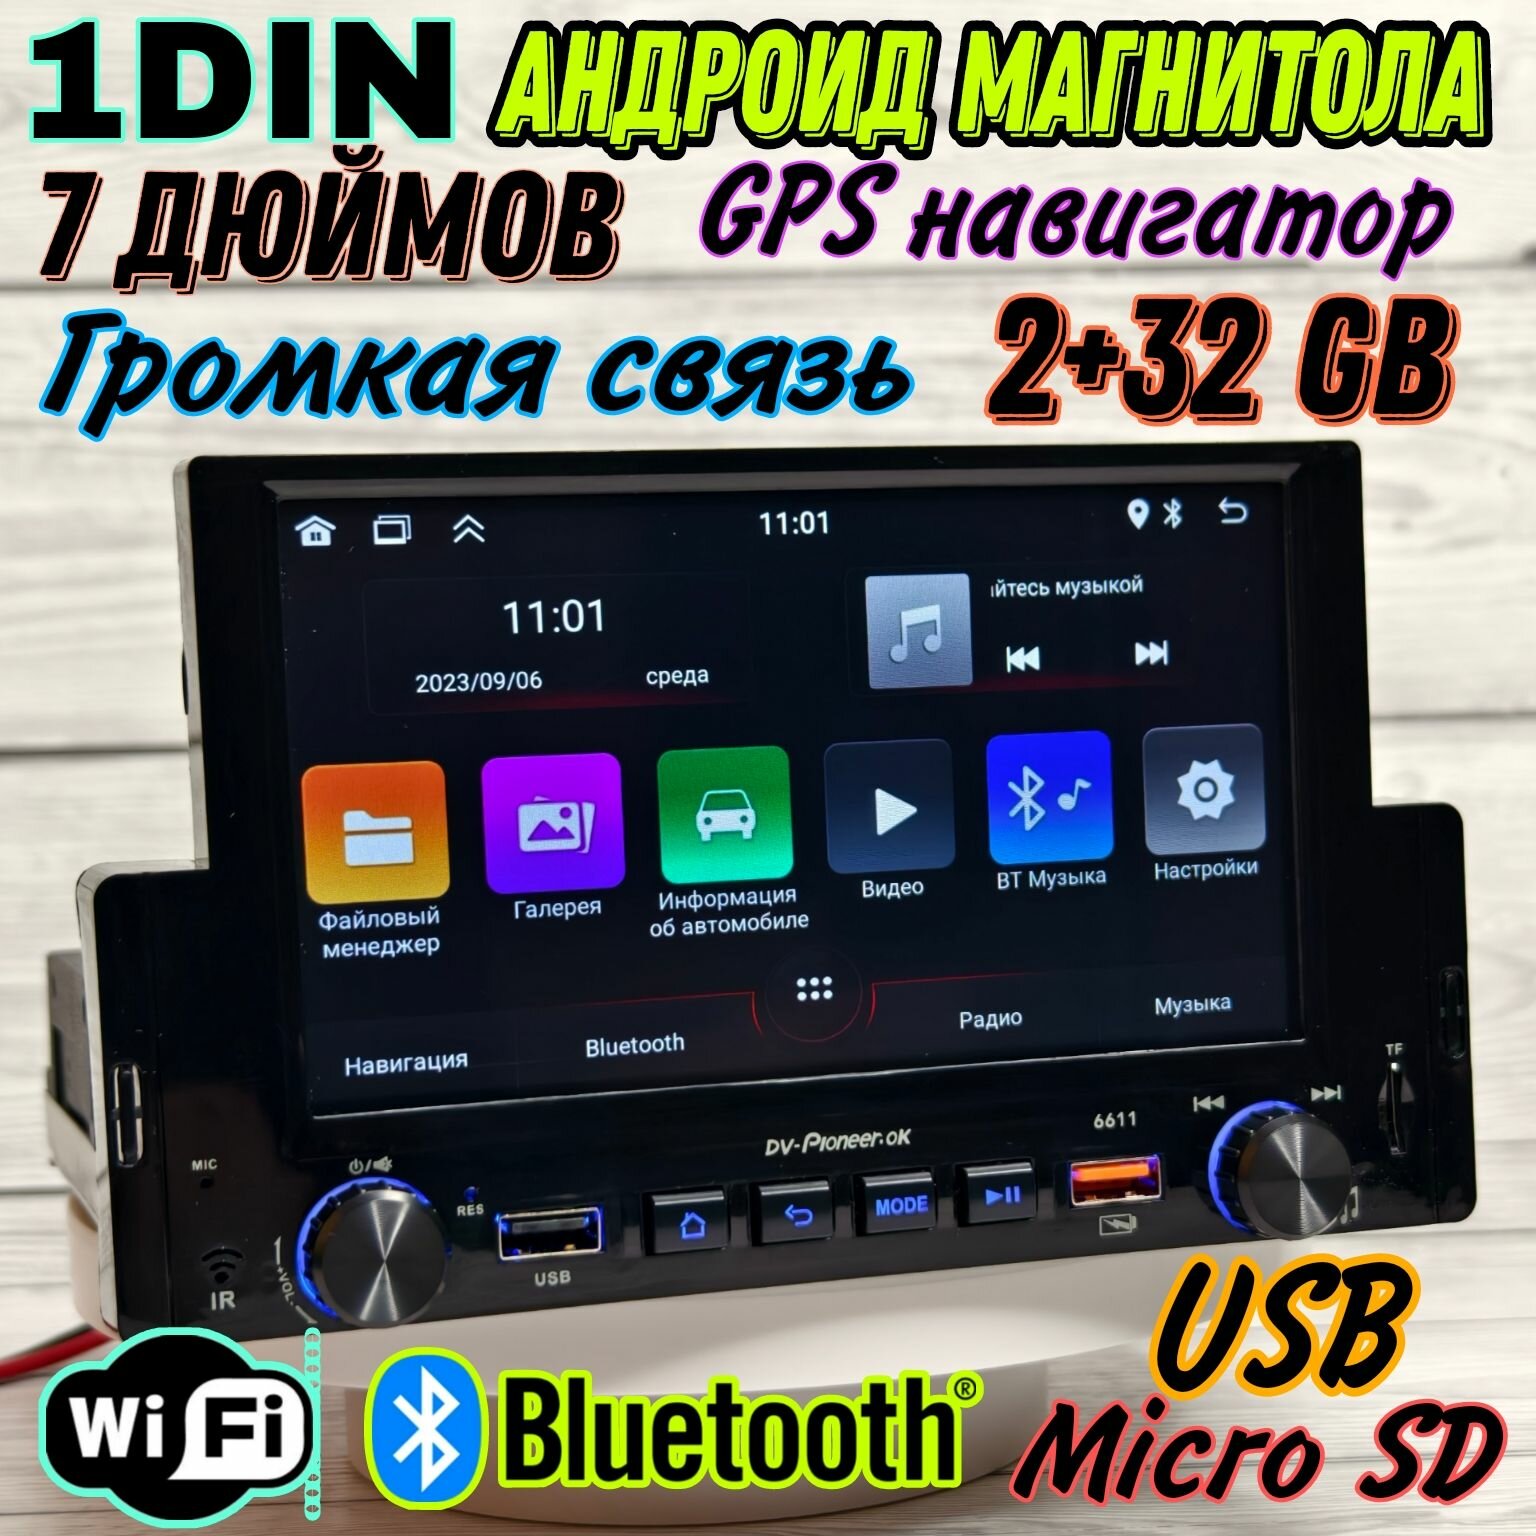 Андроид Автомагнитола 1DIN 7 дюймов 2/32 GB GPS навигатор Wi-Fi Bluetooth